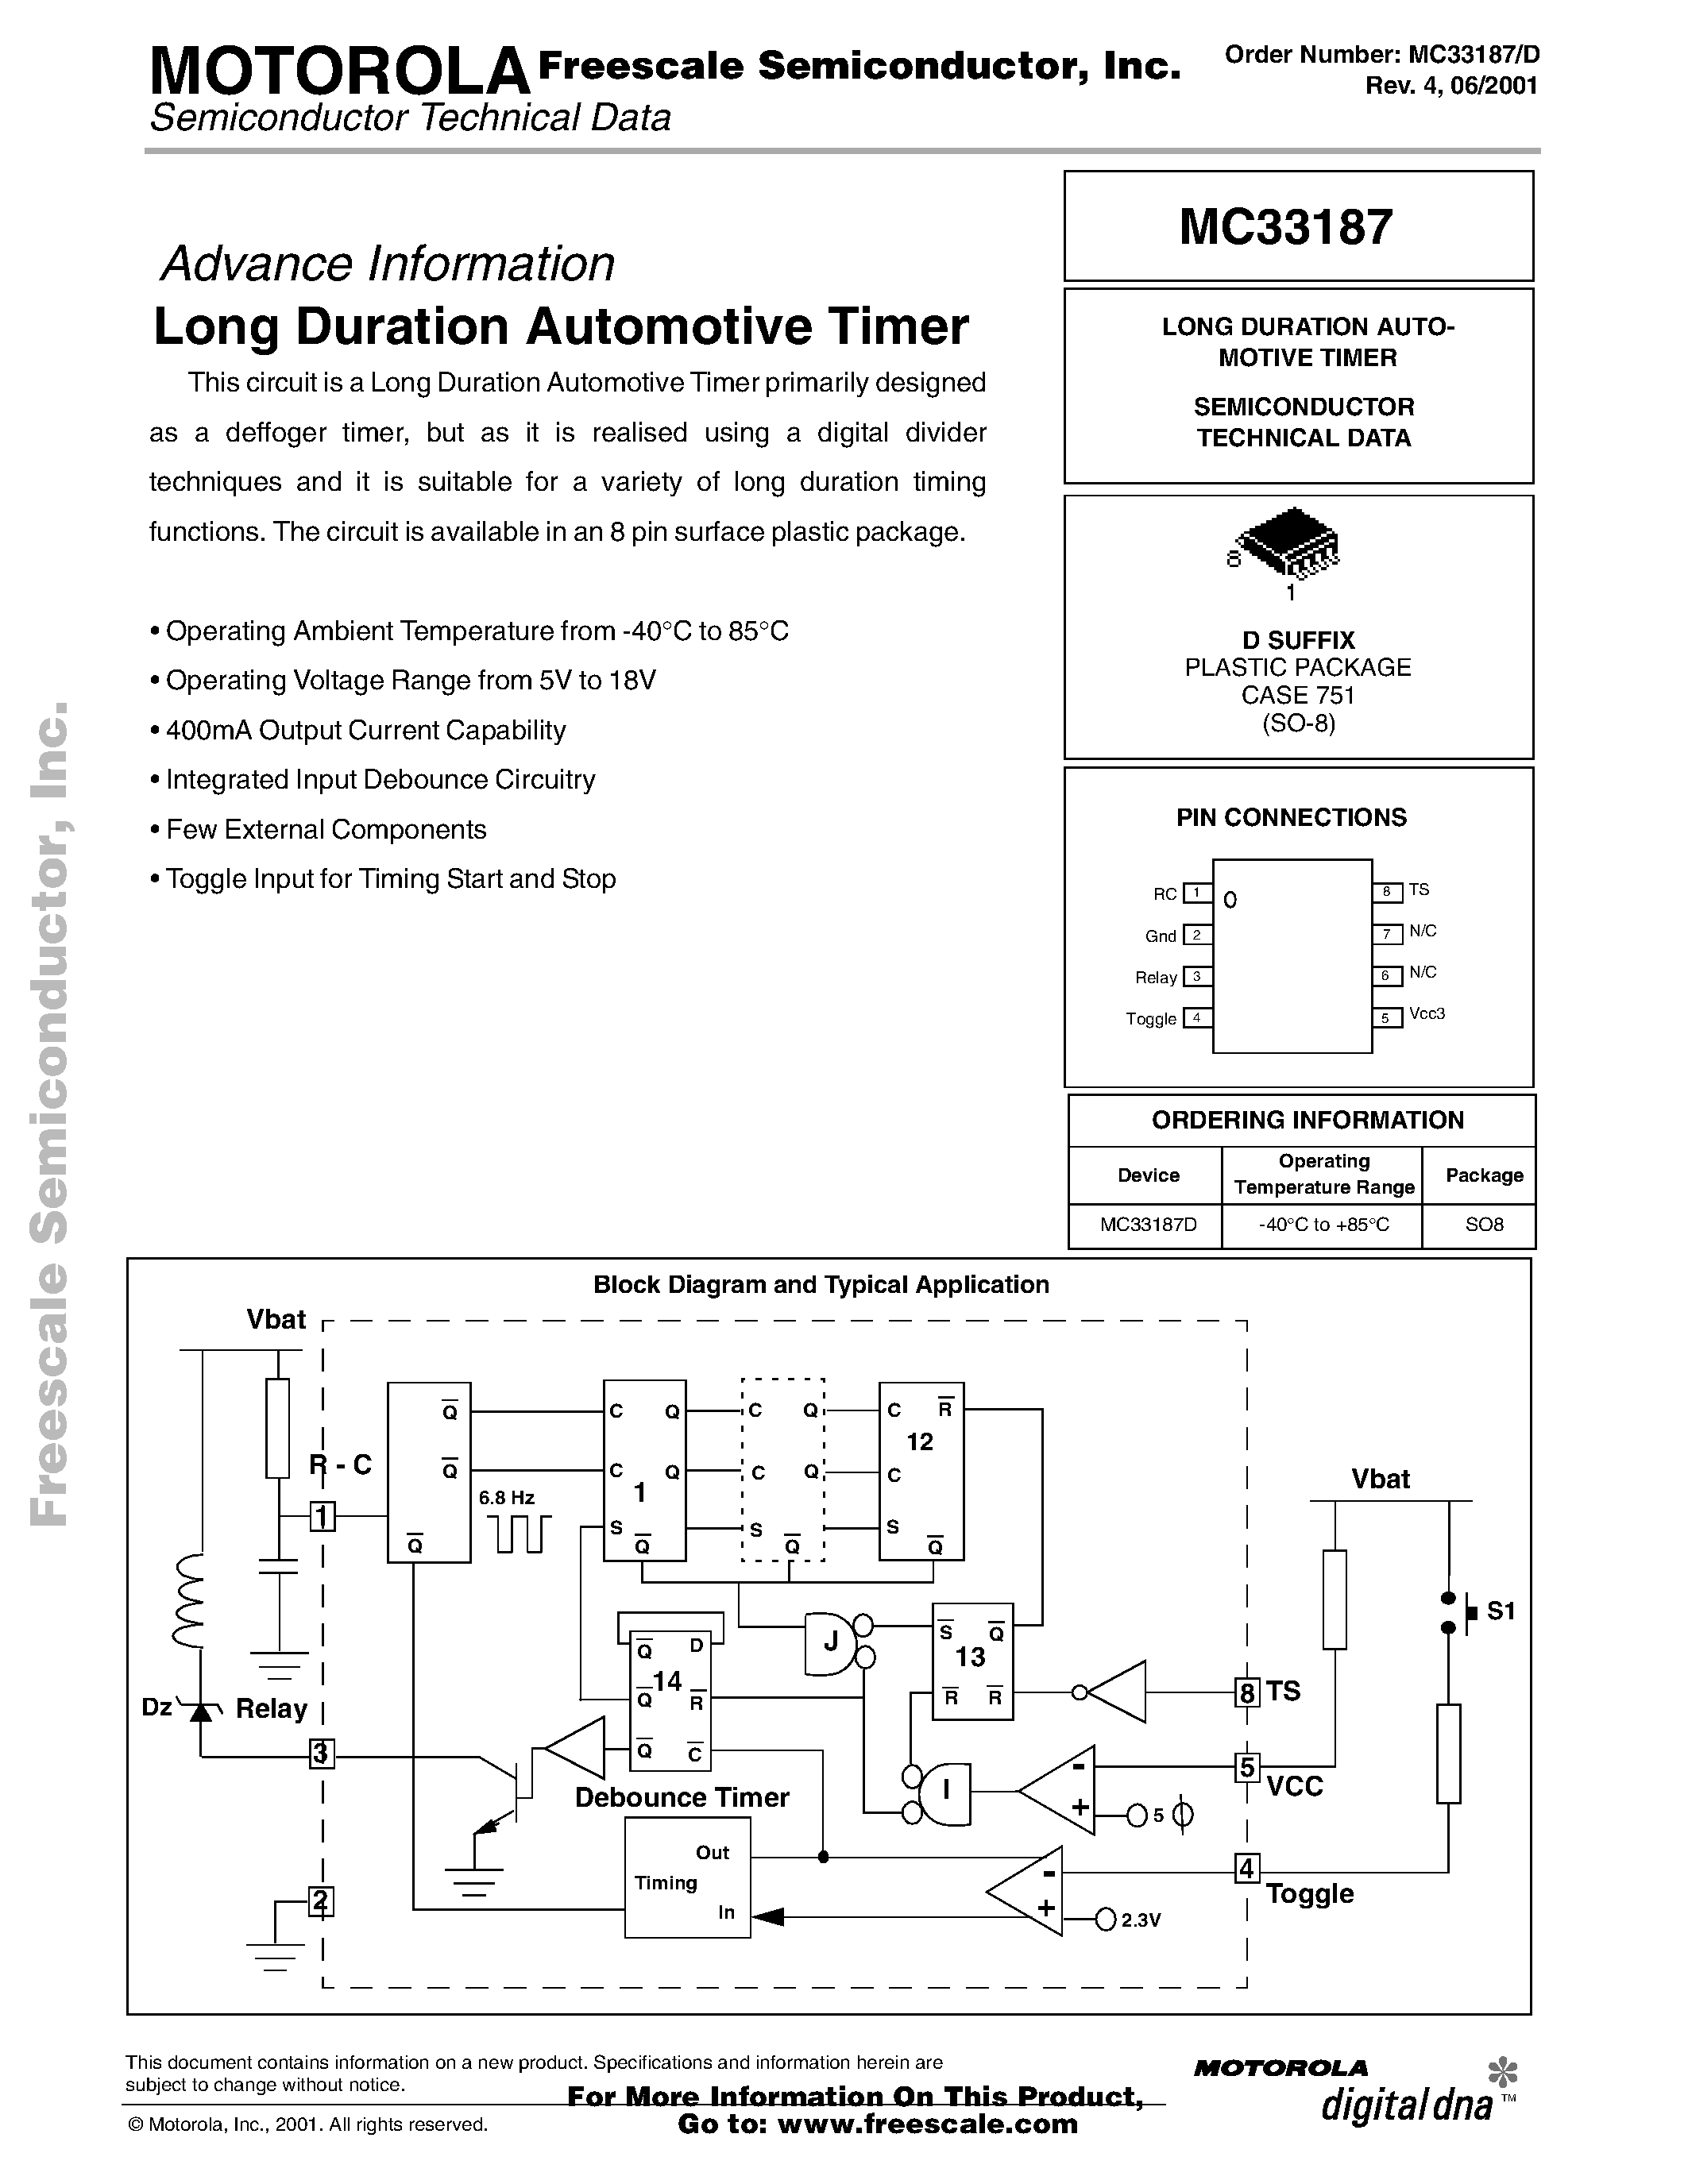 Даташит MC33187 - Long Duration Automotive Timer страница 1